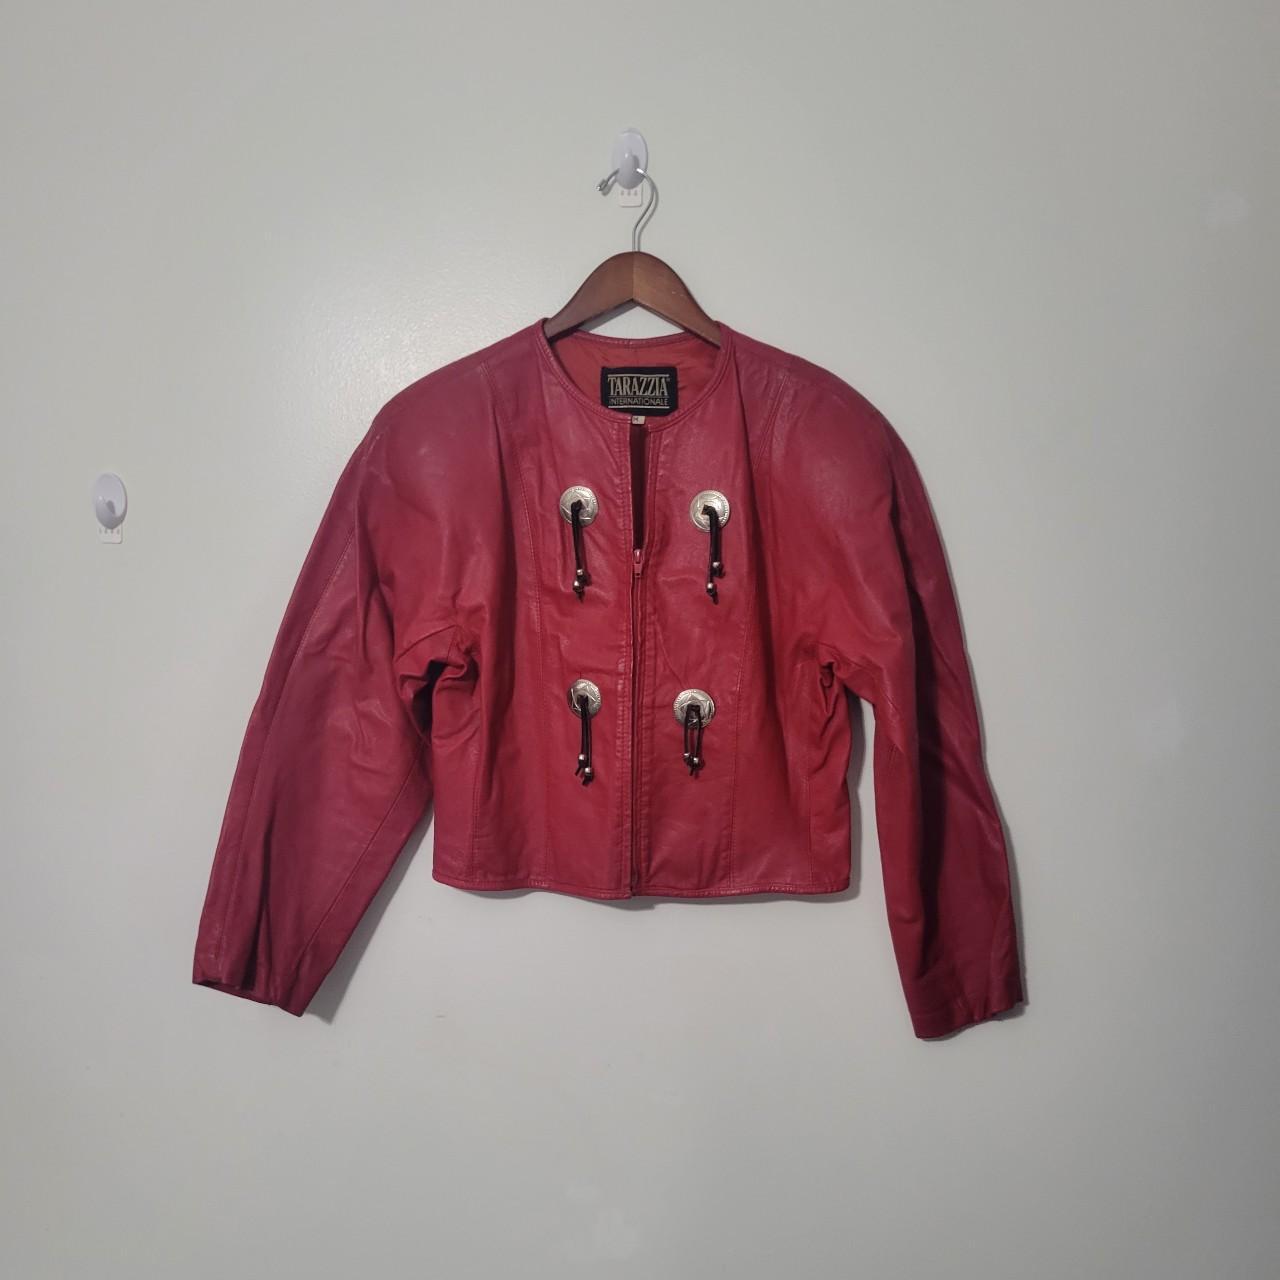 MEDIUM Vintage TARAZZIA Red Leather Western Jacket... - Depop